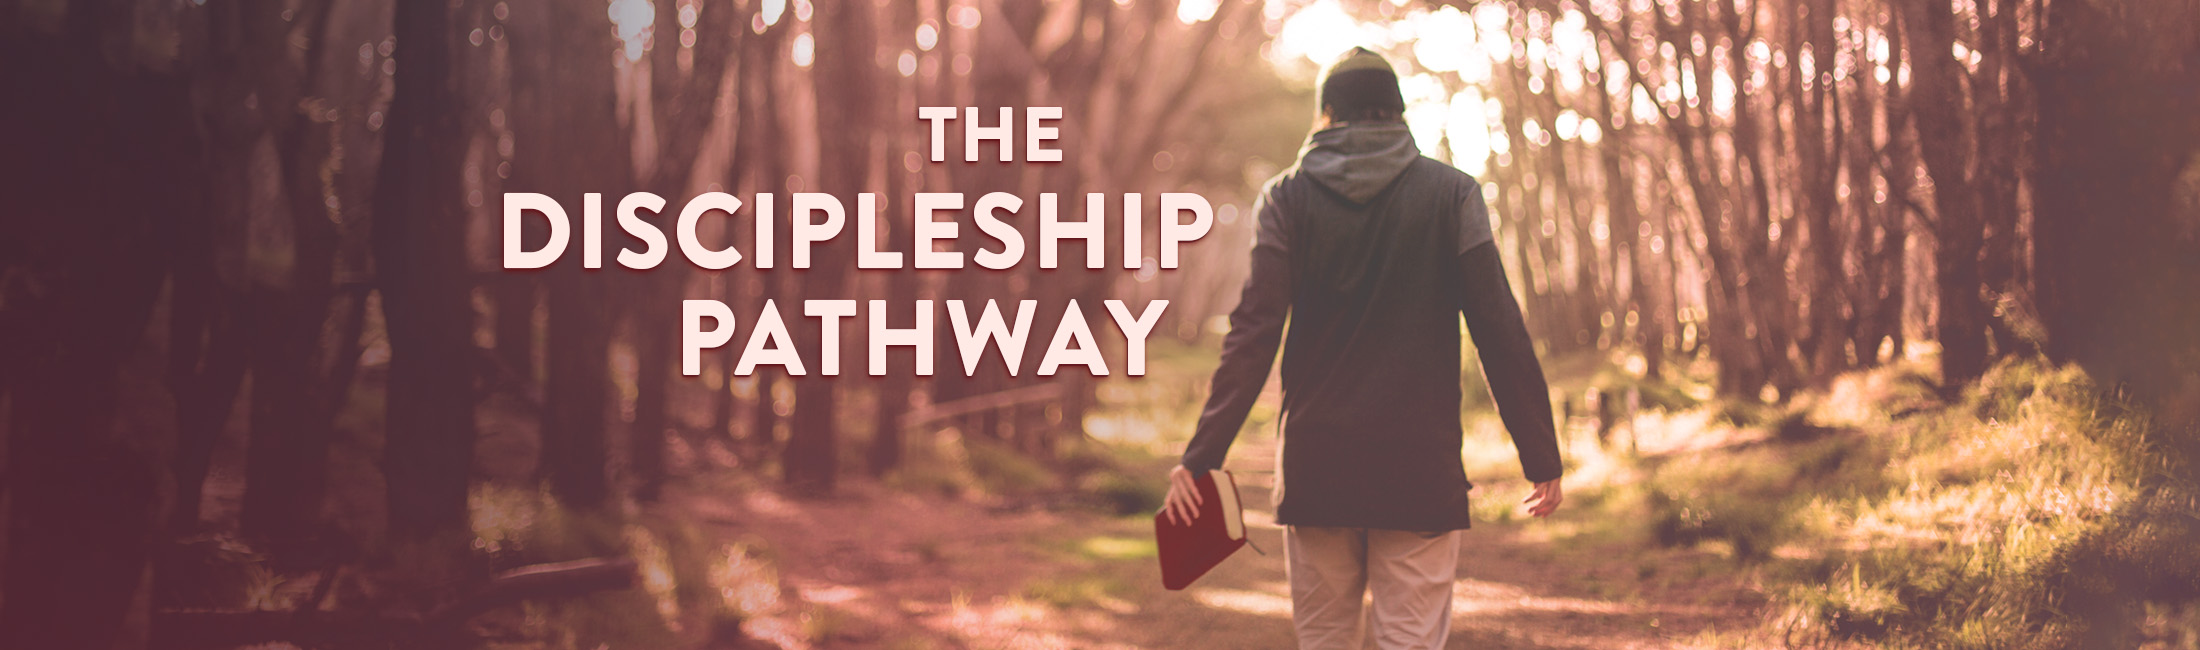 the discipleship pathway